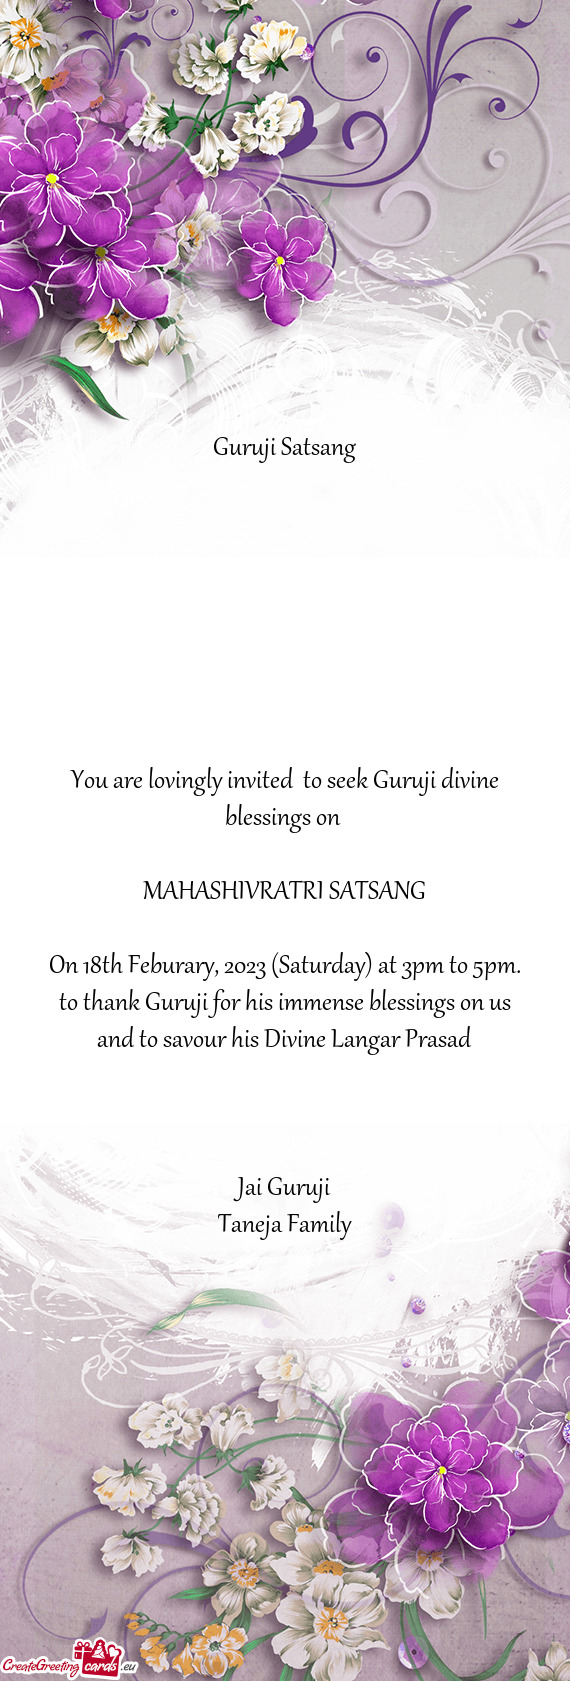 You are lovingly invited to seek Guruji divine blessings on